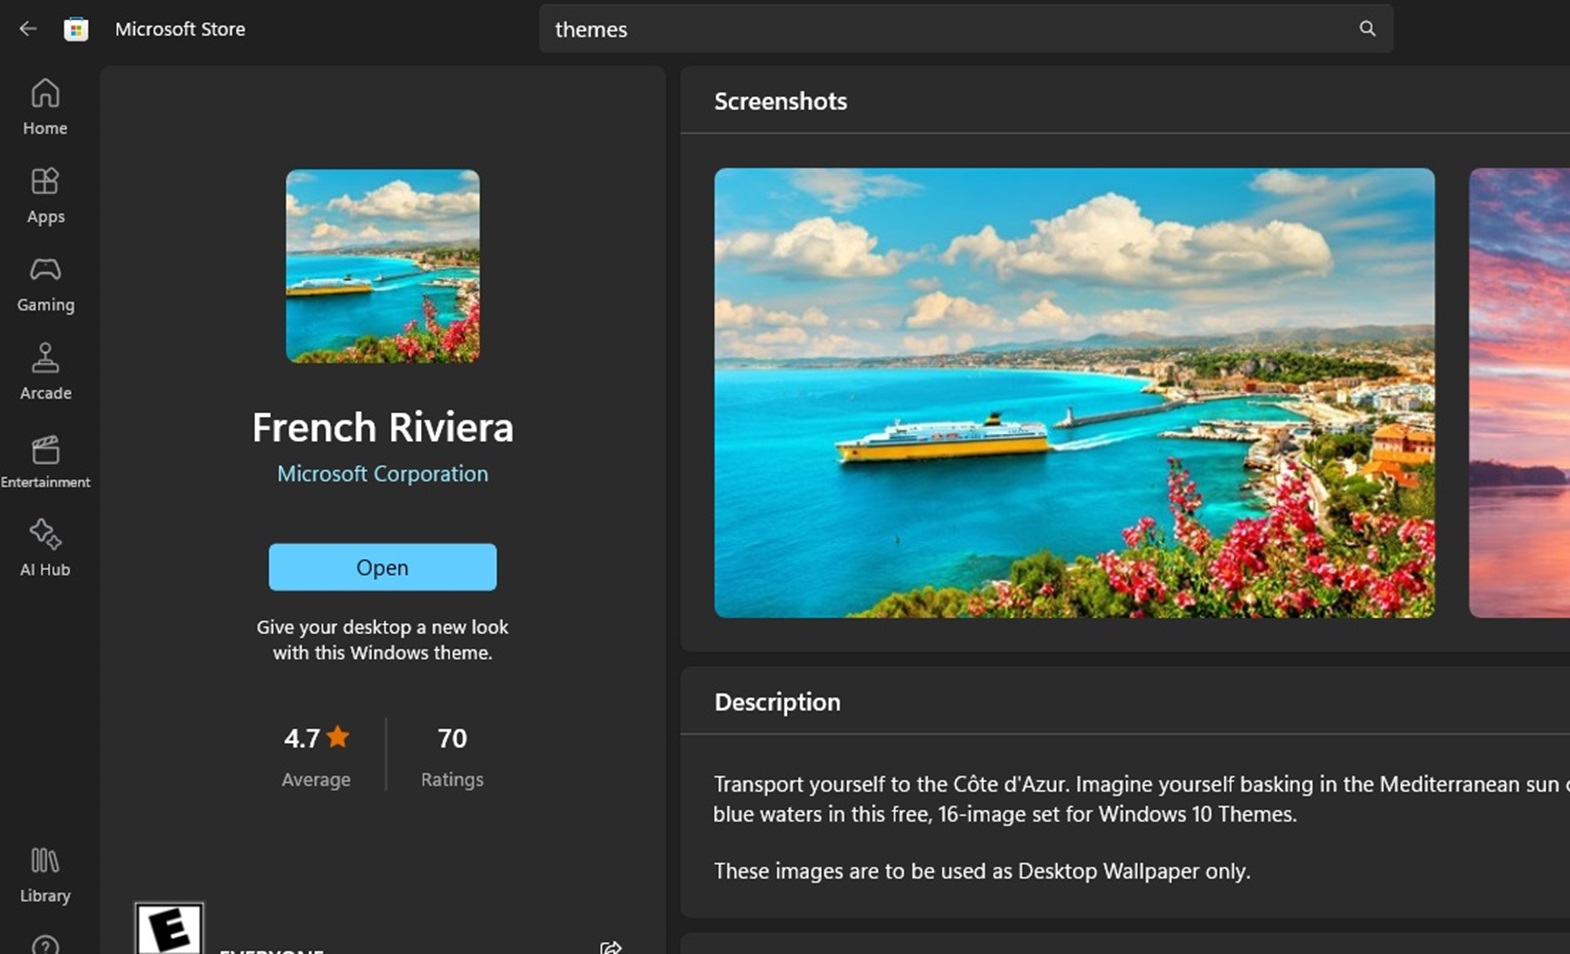 Screenshot showing French Riviera theme in Microsoft Store.